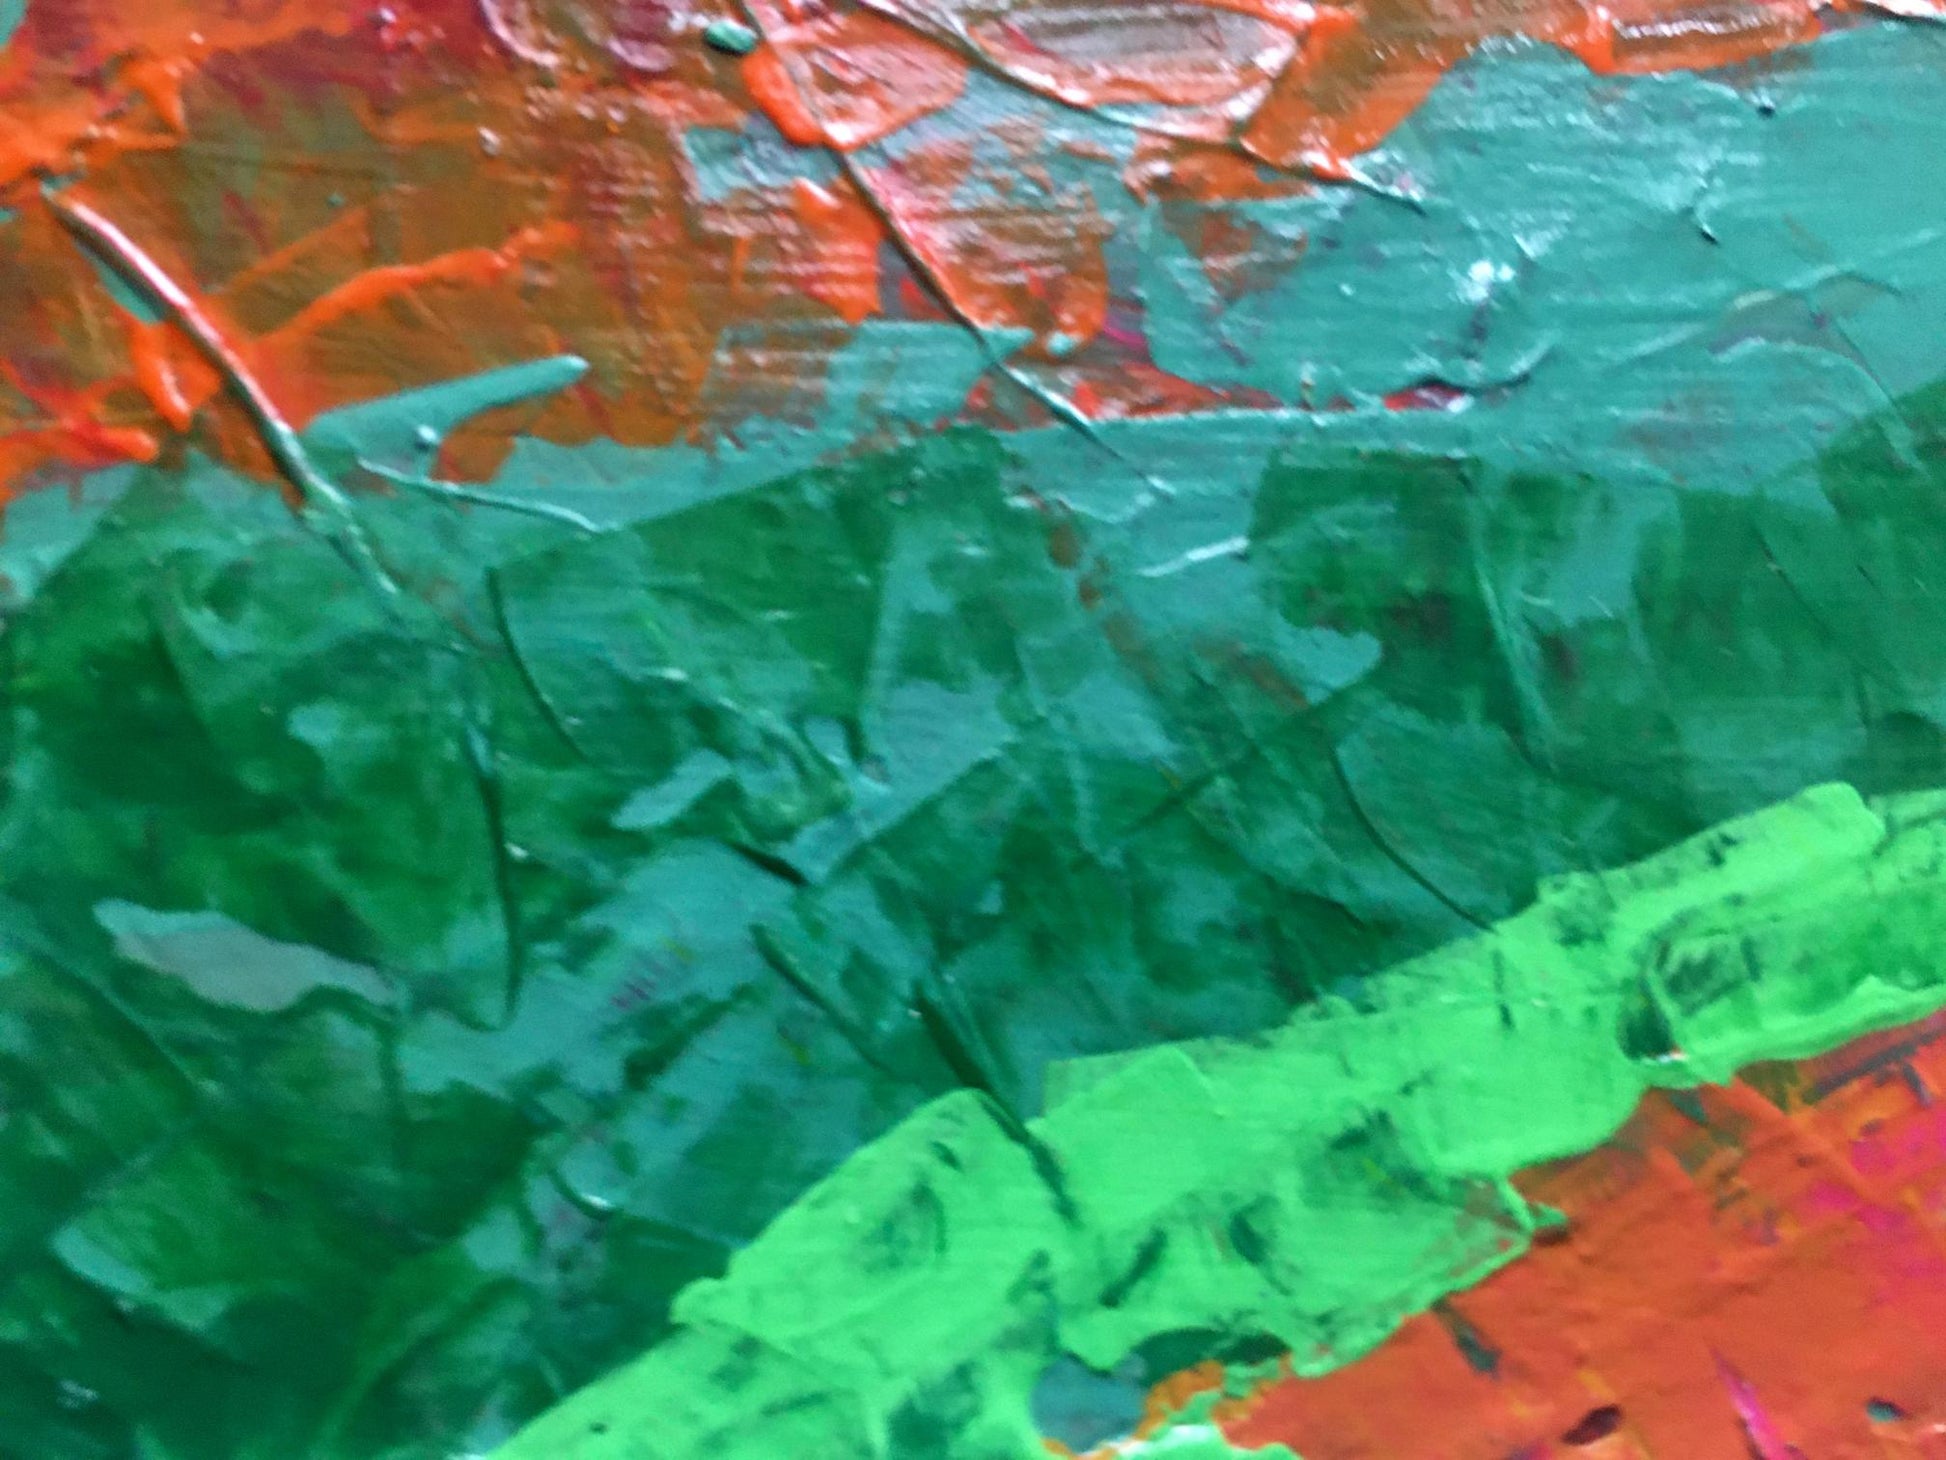 V. Zadorozhnya's interpretation of "Mountain Colored Fields" in oil